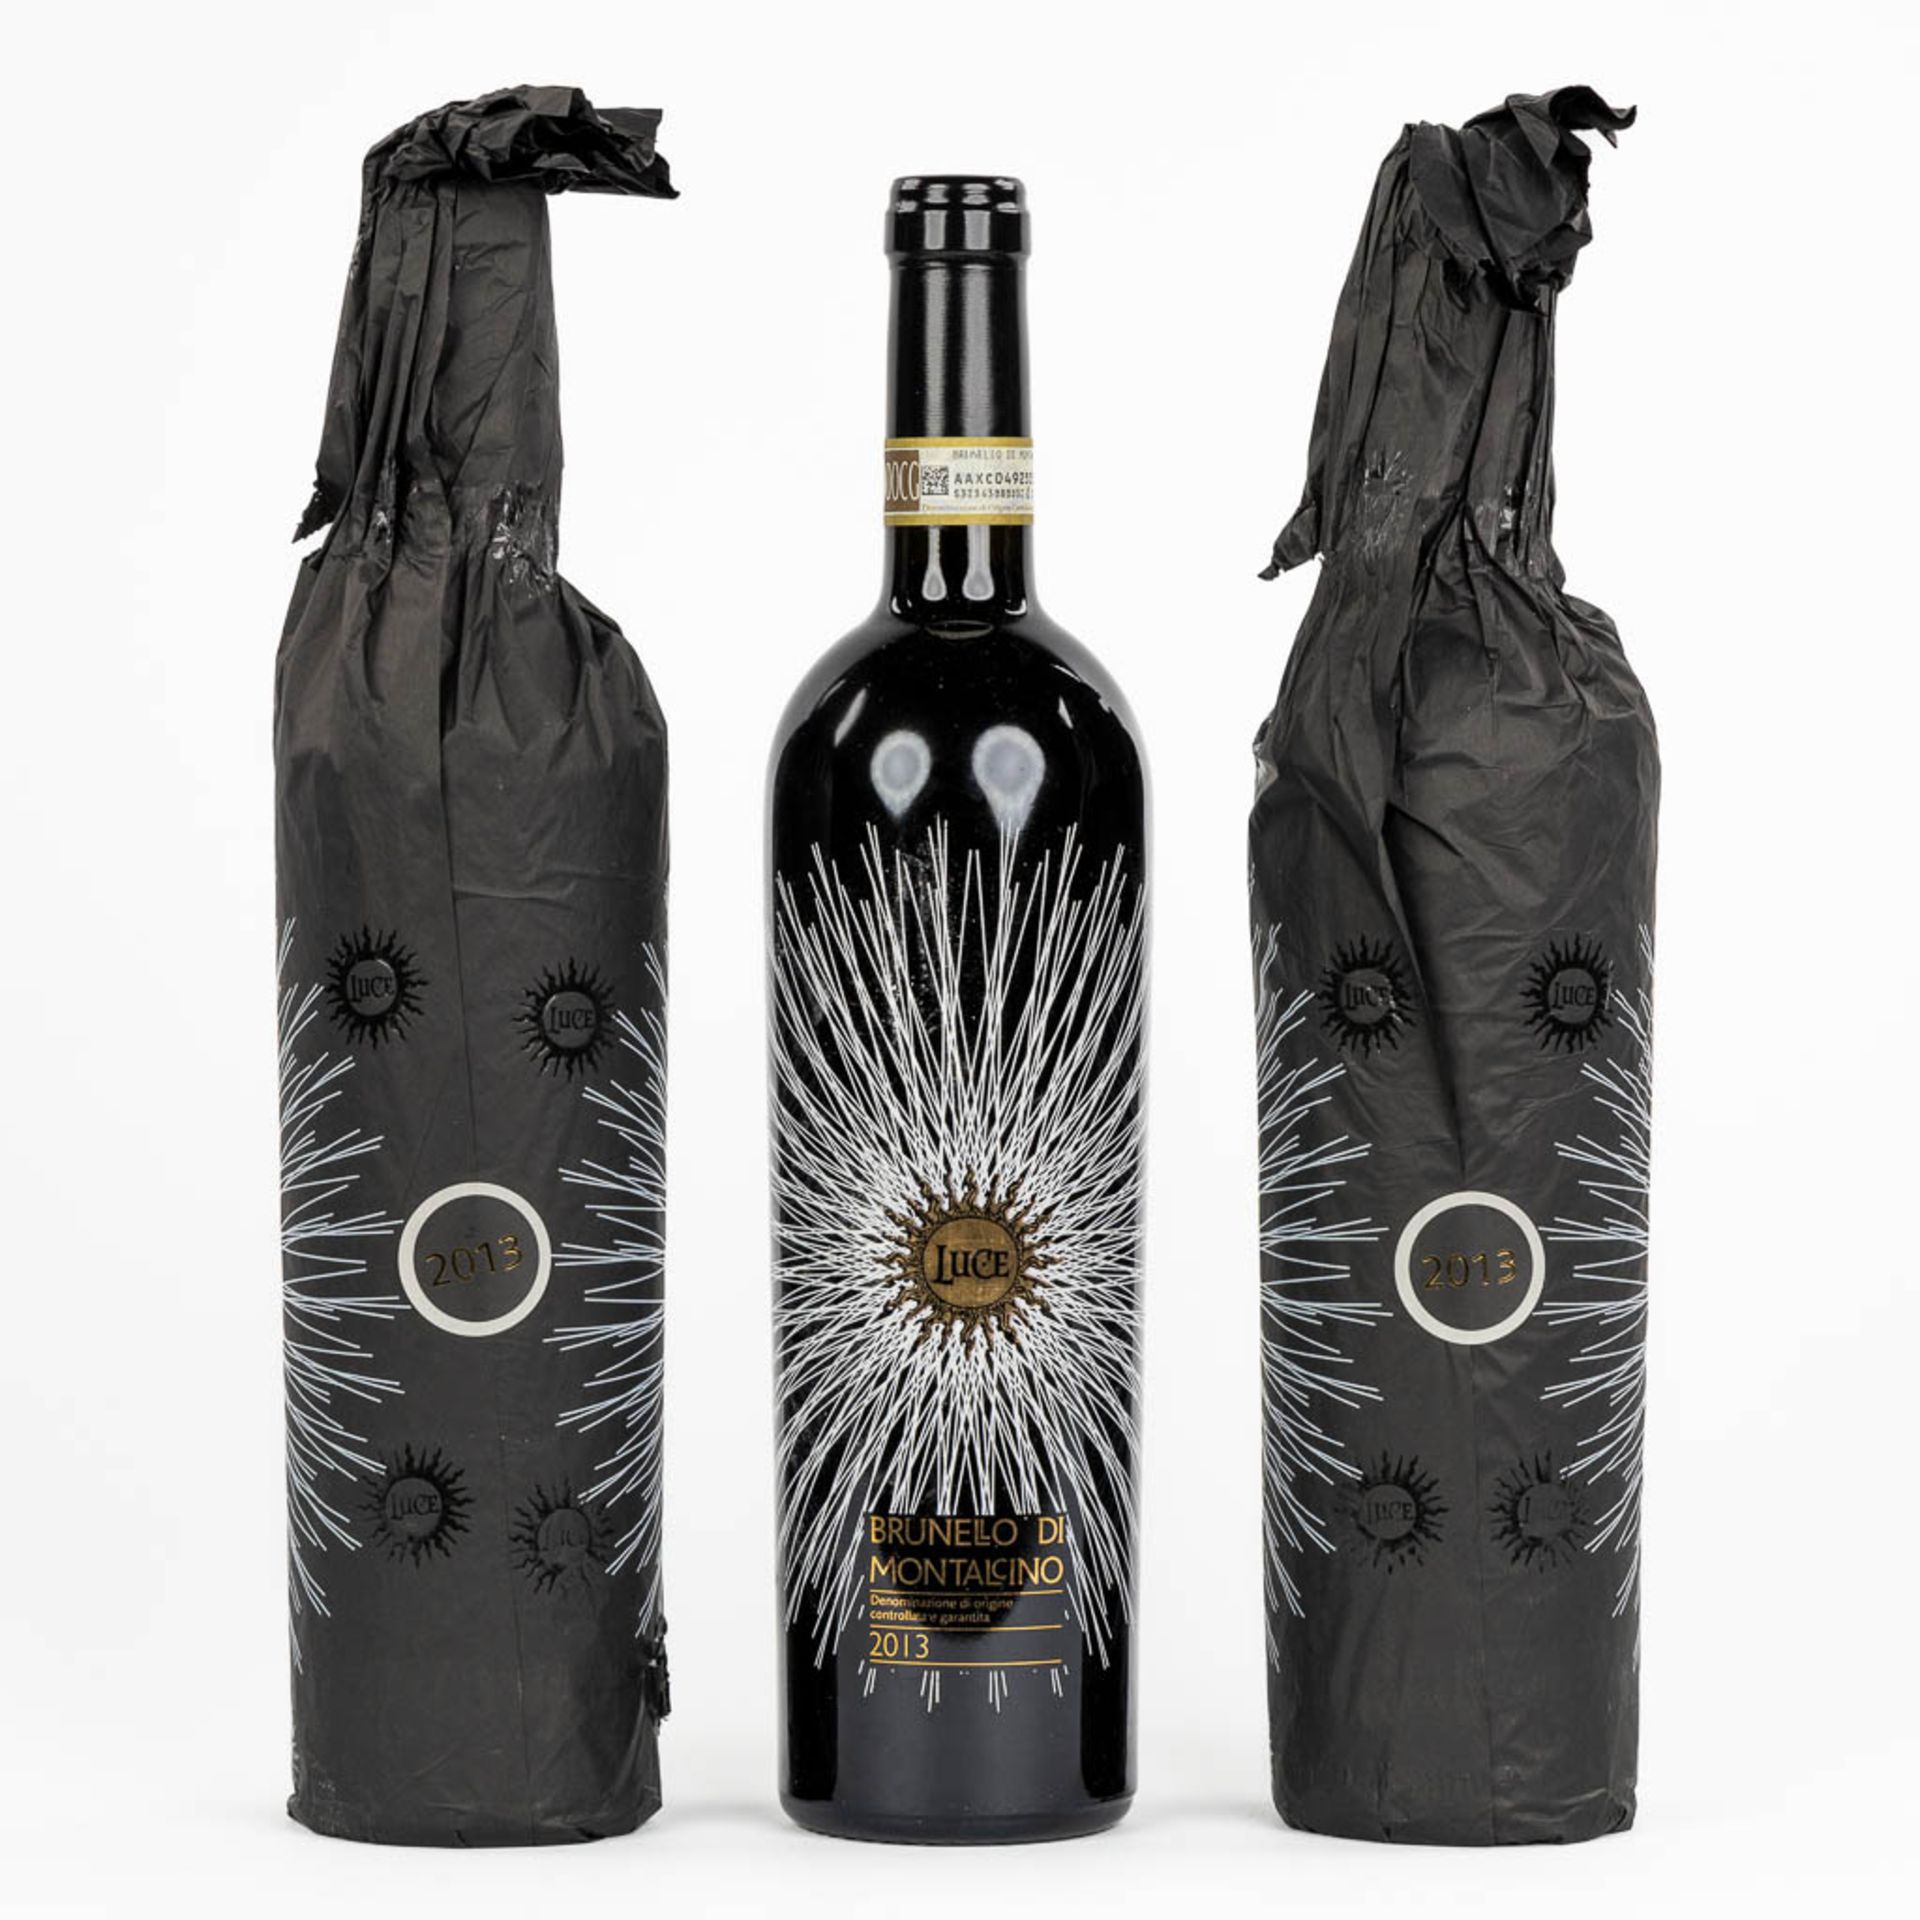 2013 Luce Brunello Di Montalcino (owc), 3 bottles. - Image 5 of 7